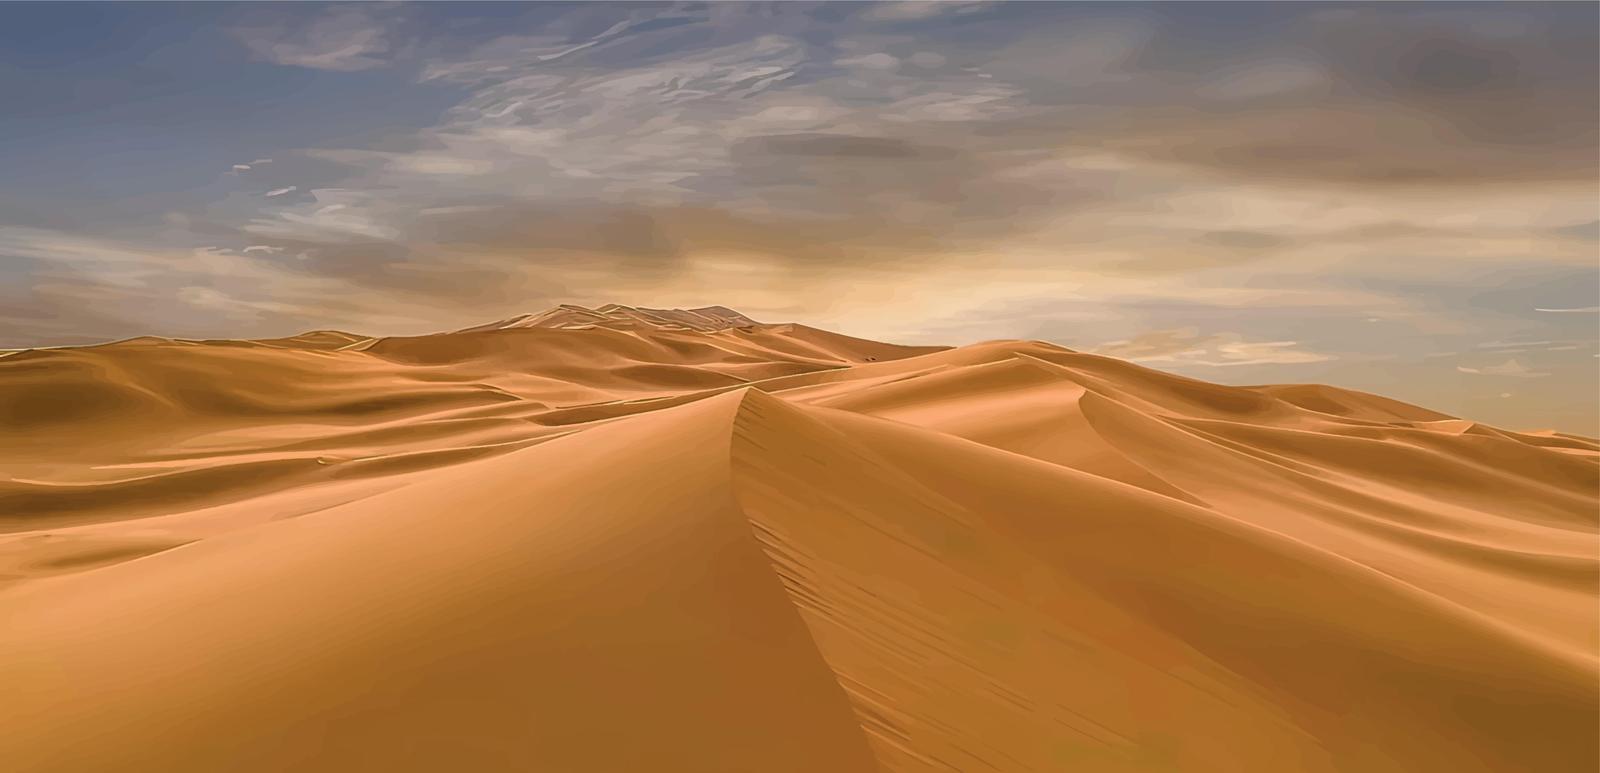 An illustration of sand and desert